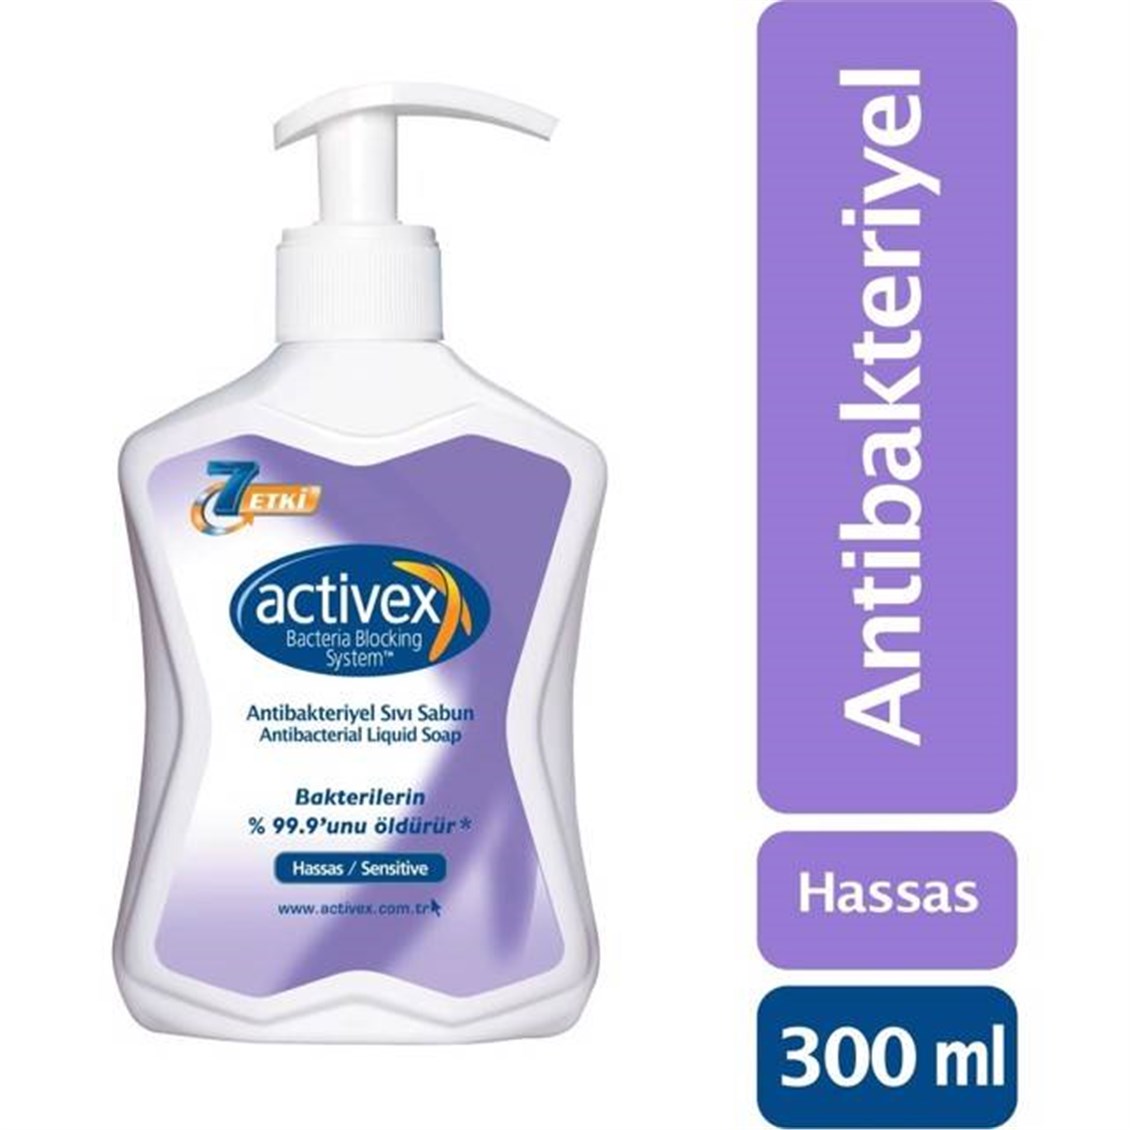 Activex Antibakteriyel Sıvı Sabun Hassas 300 ml - Onur Market